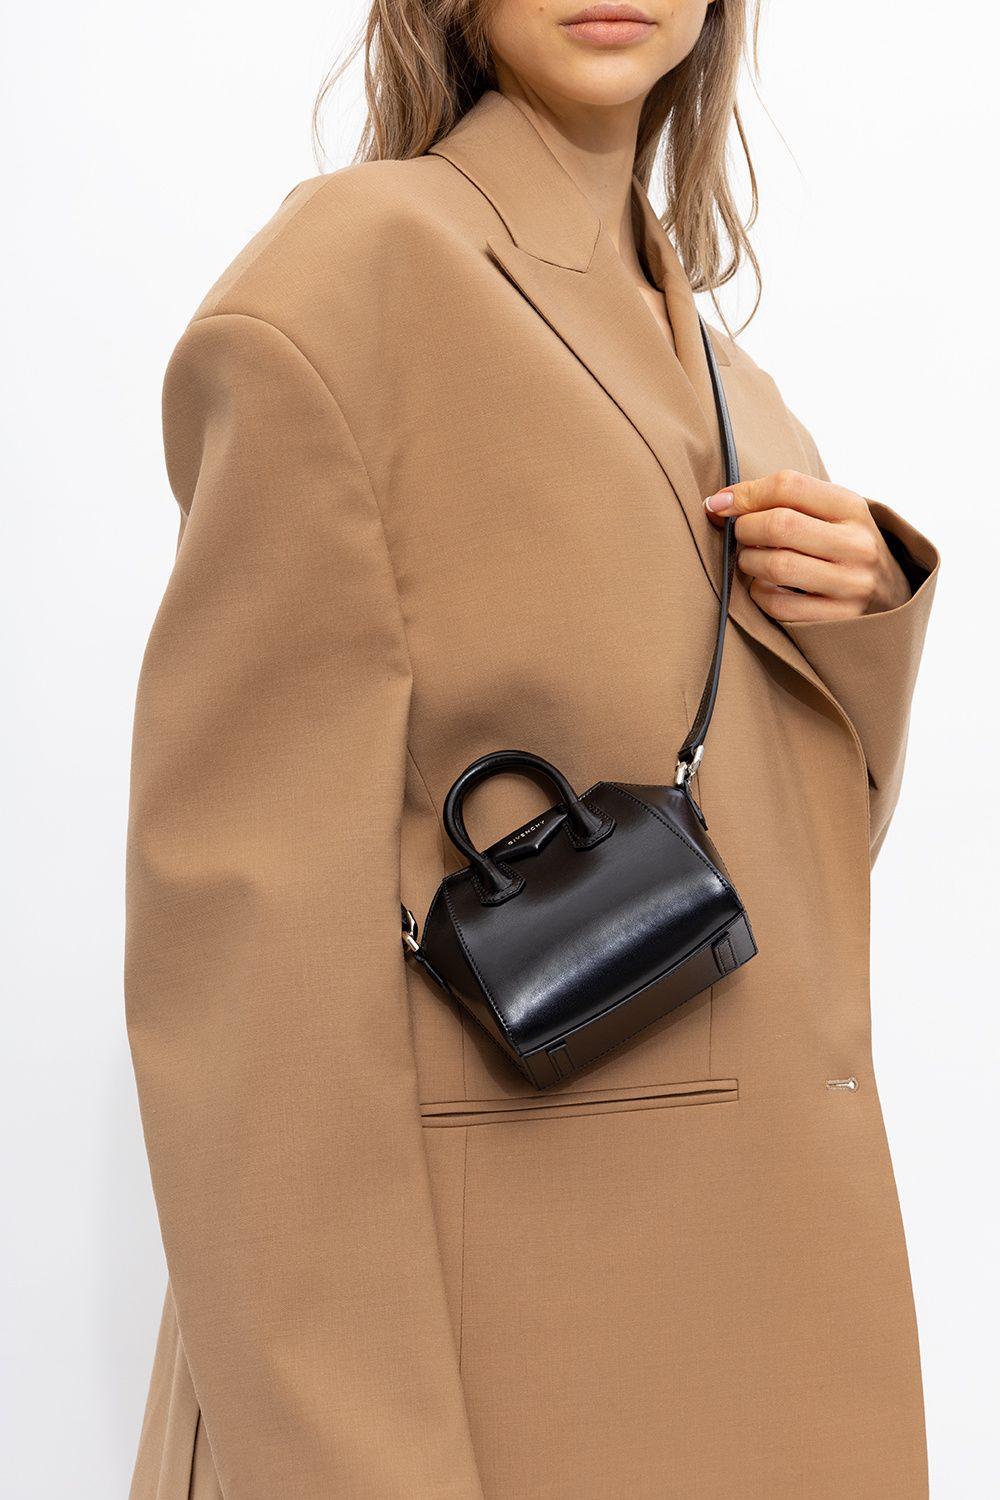 Givenchy 'antigona Micro' Shoulder Bag in Black